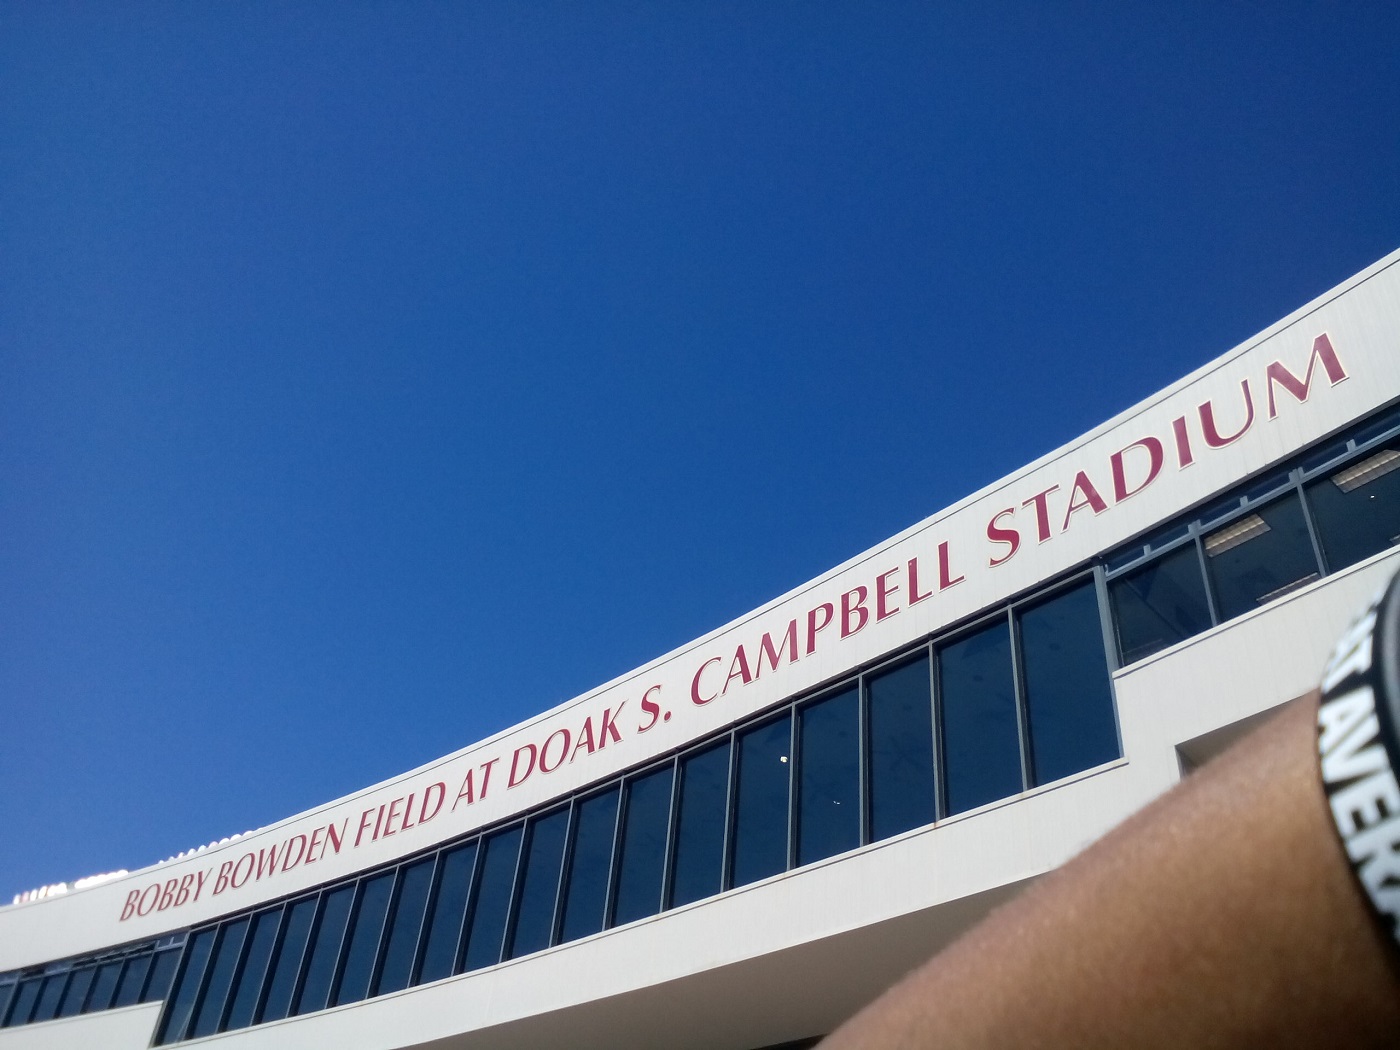 Doak Campbell Stadium